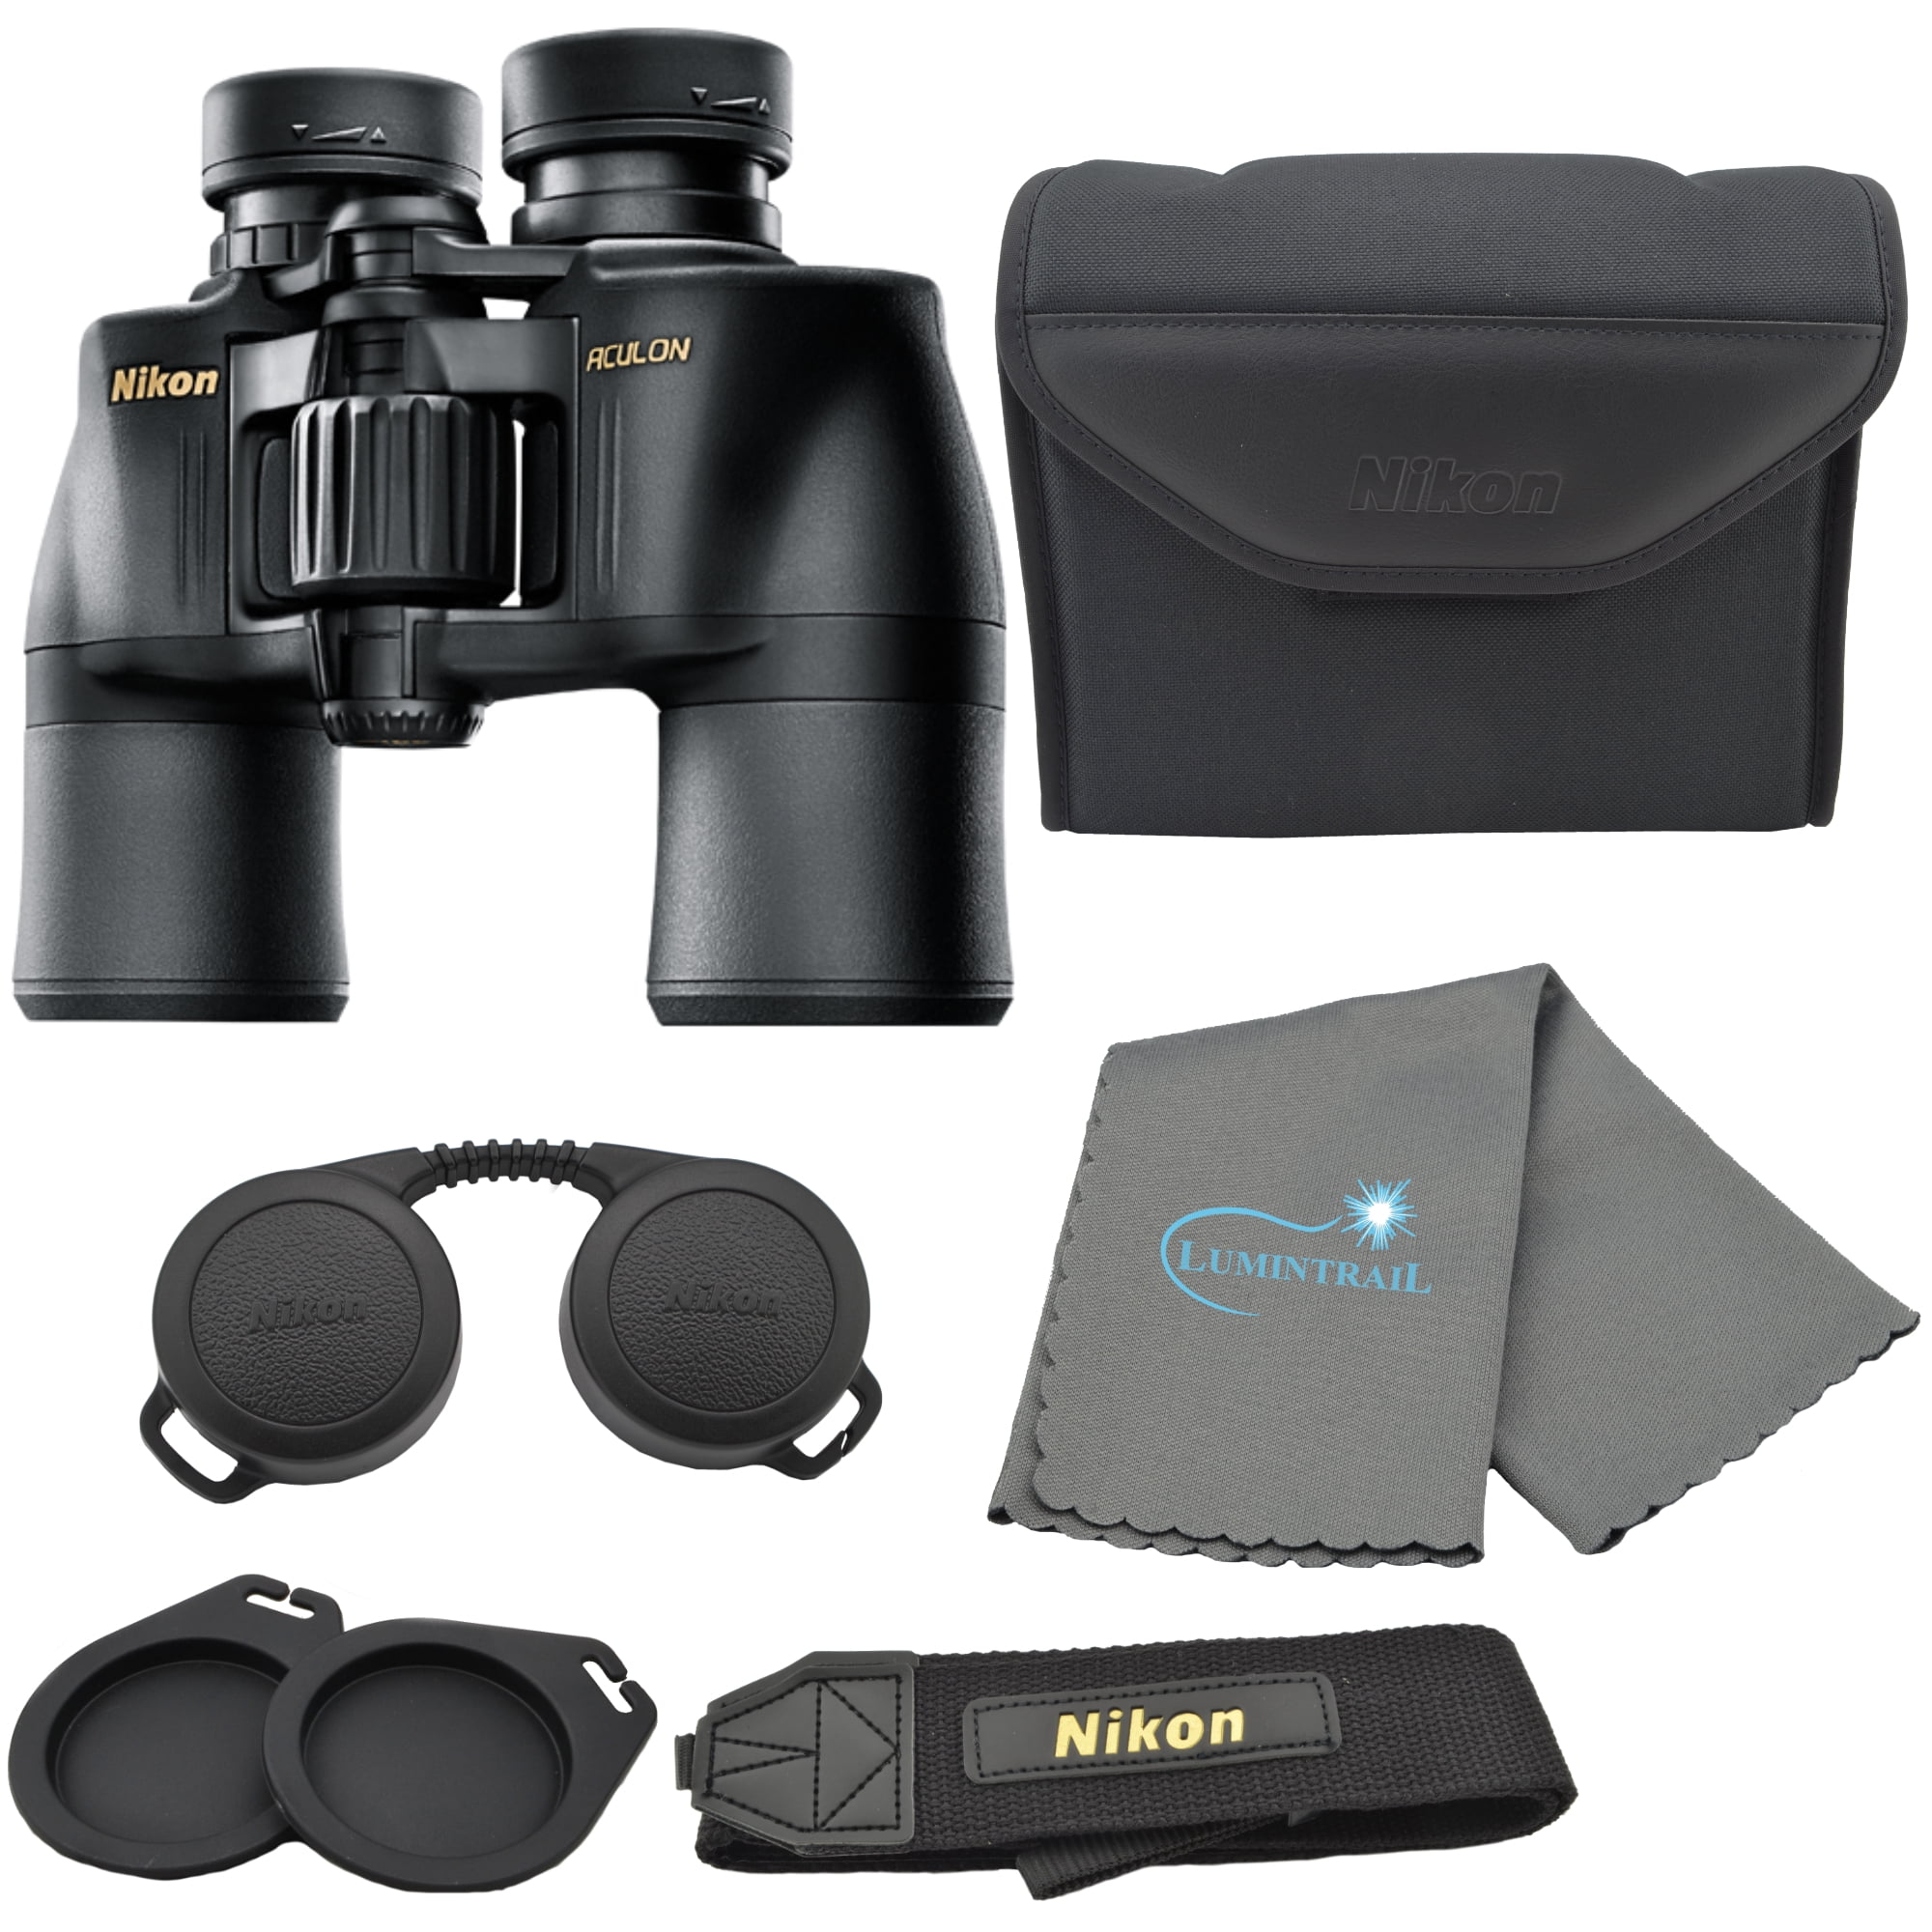 Nikon Aculon A211 8x42 Binoculars Black (8245) Bundle with a